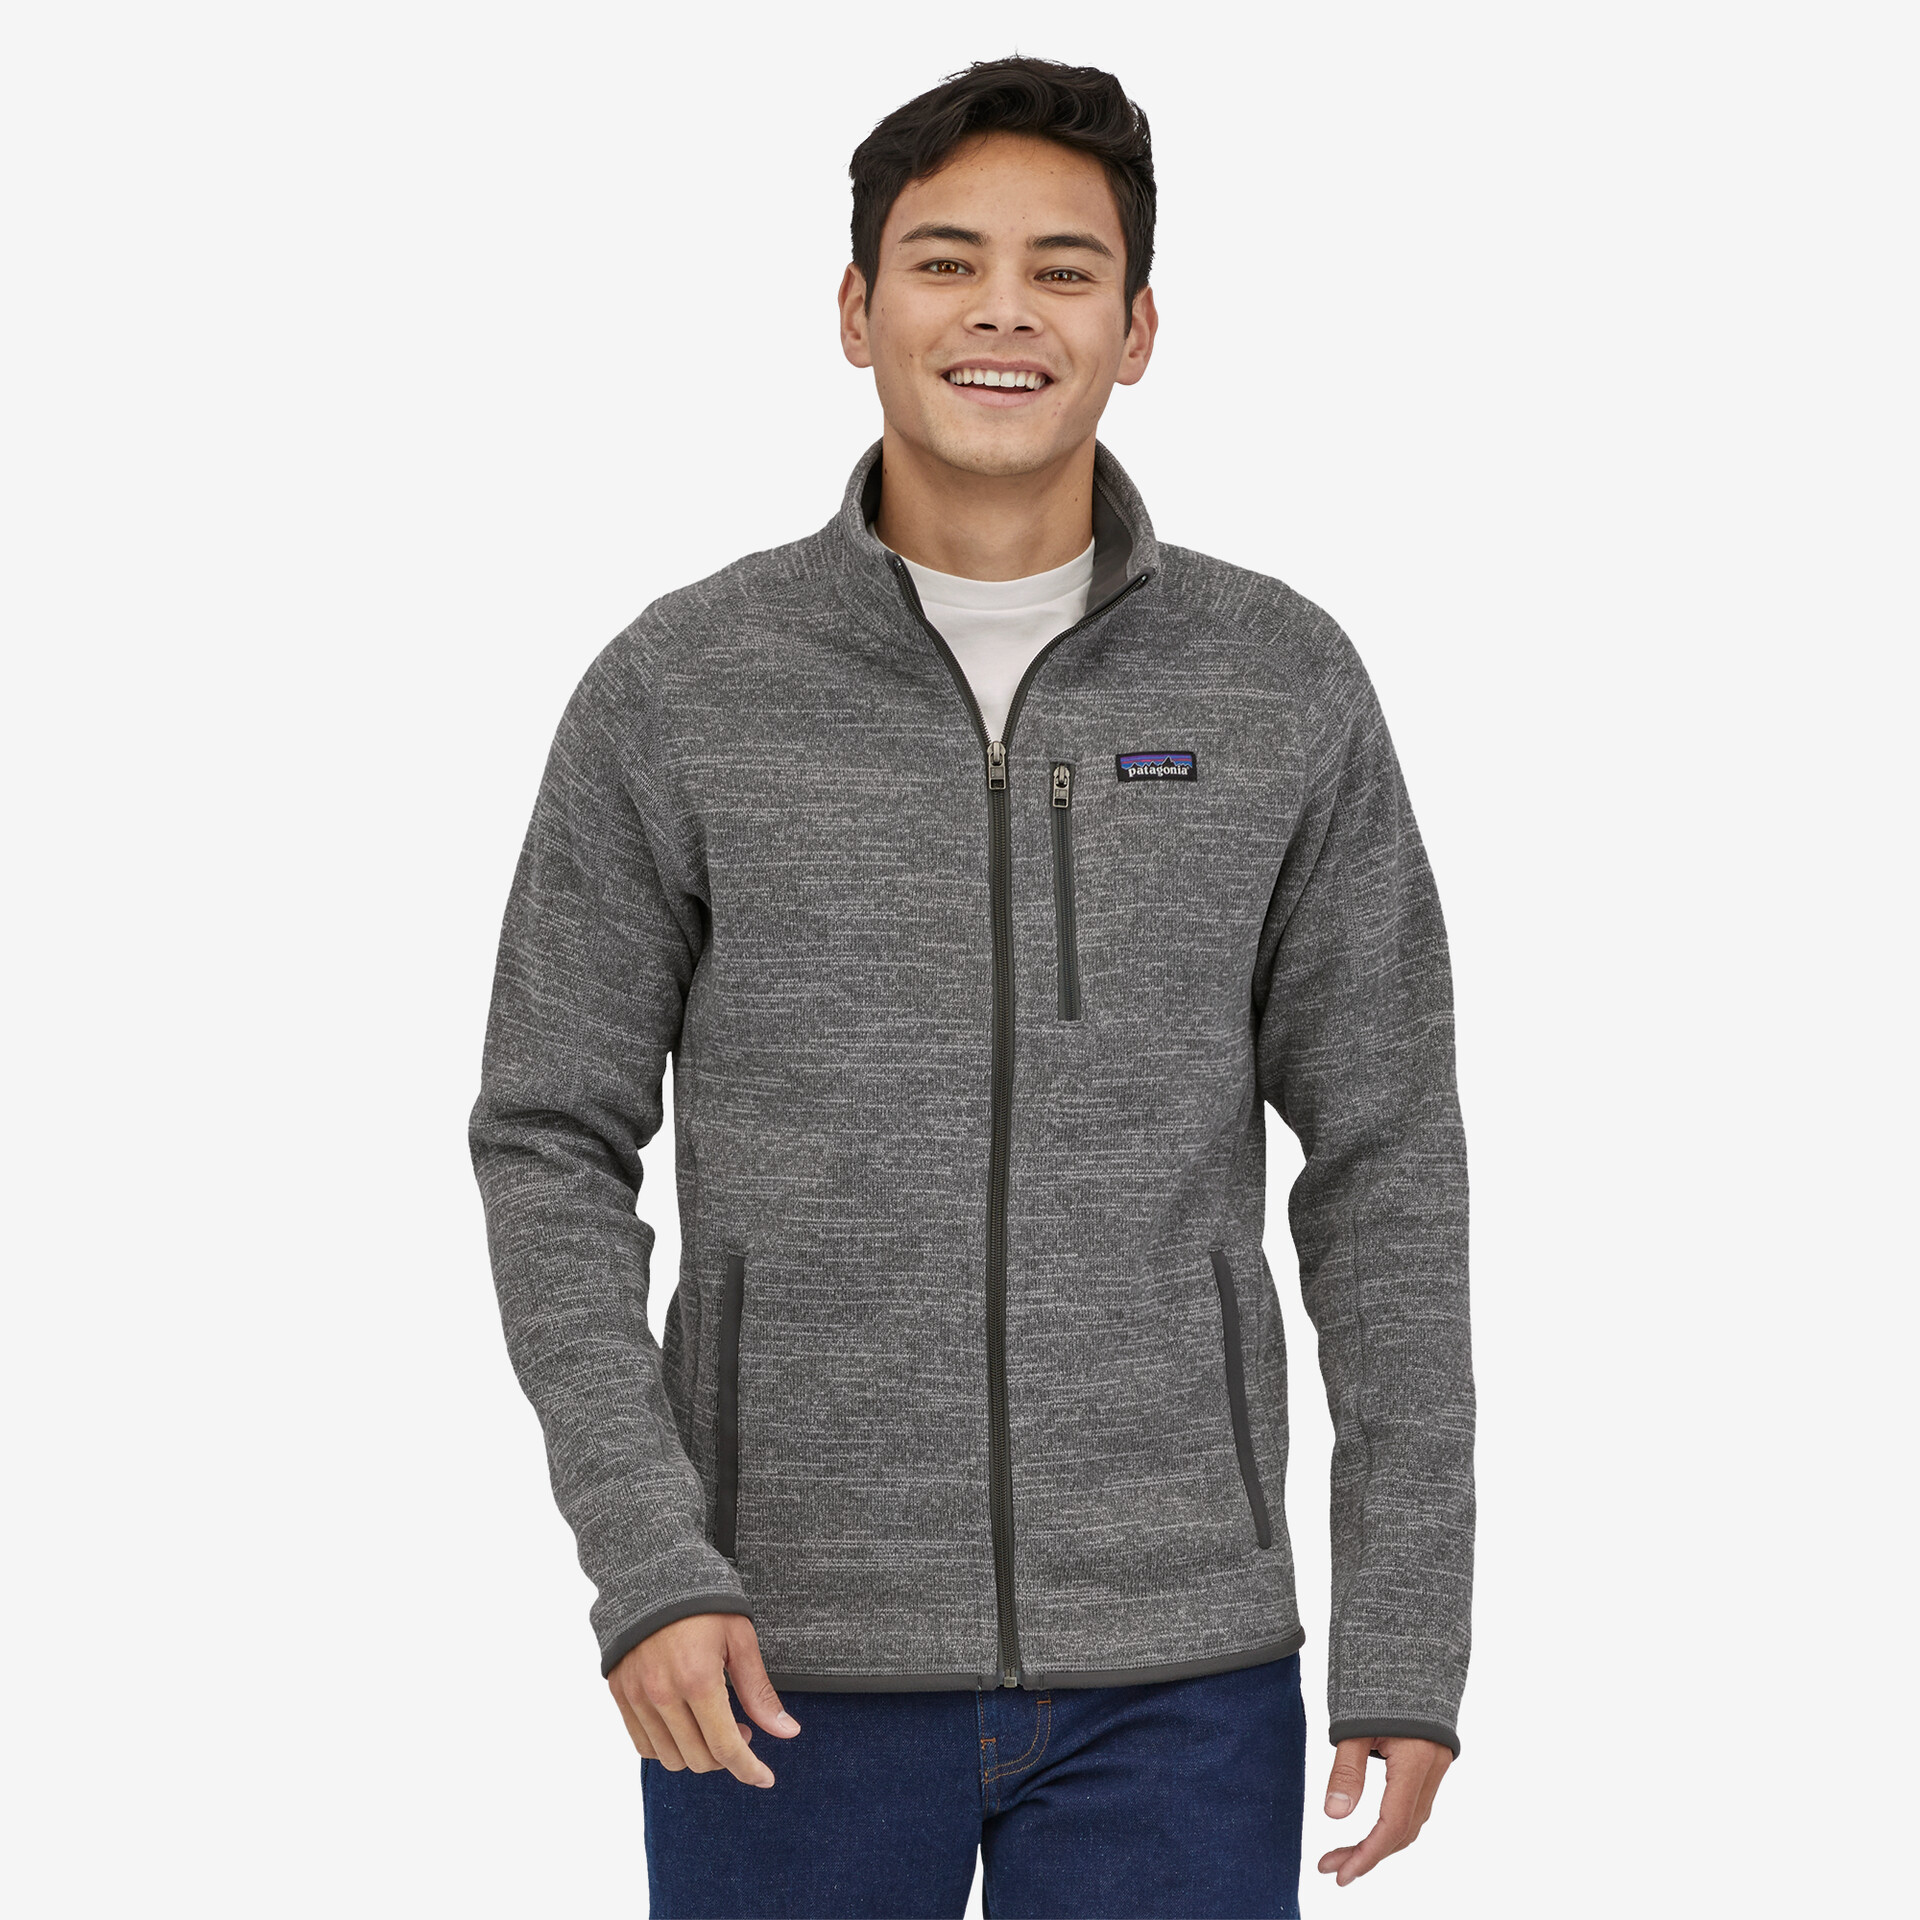 Better Sweater Fleece Jacket by Patagonia, stylish and eco-friendly fleece jacket.